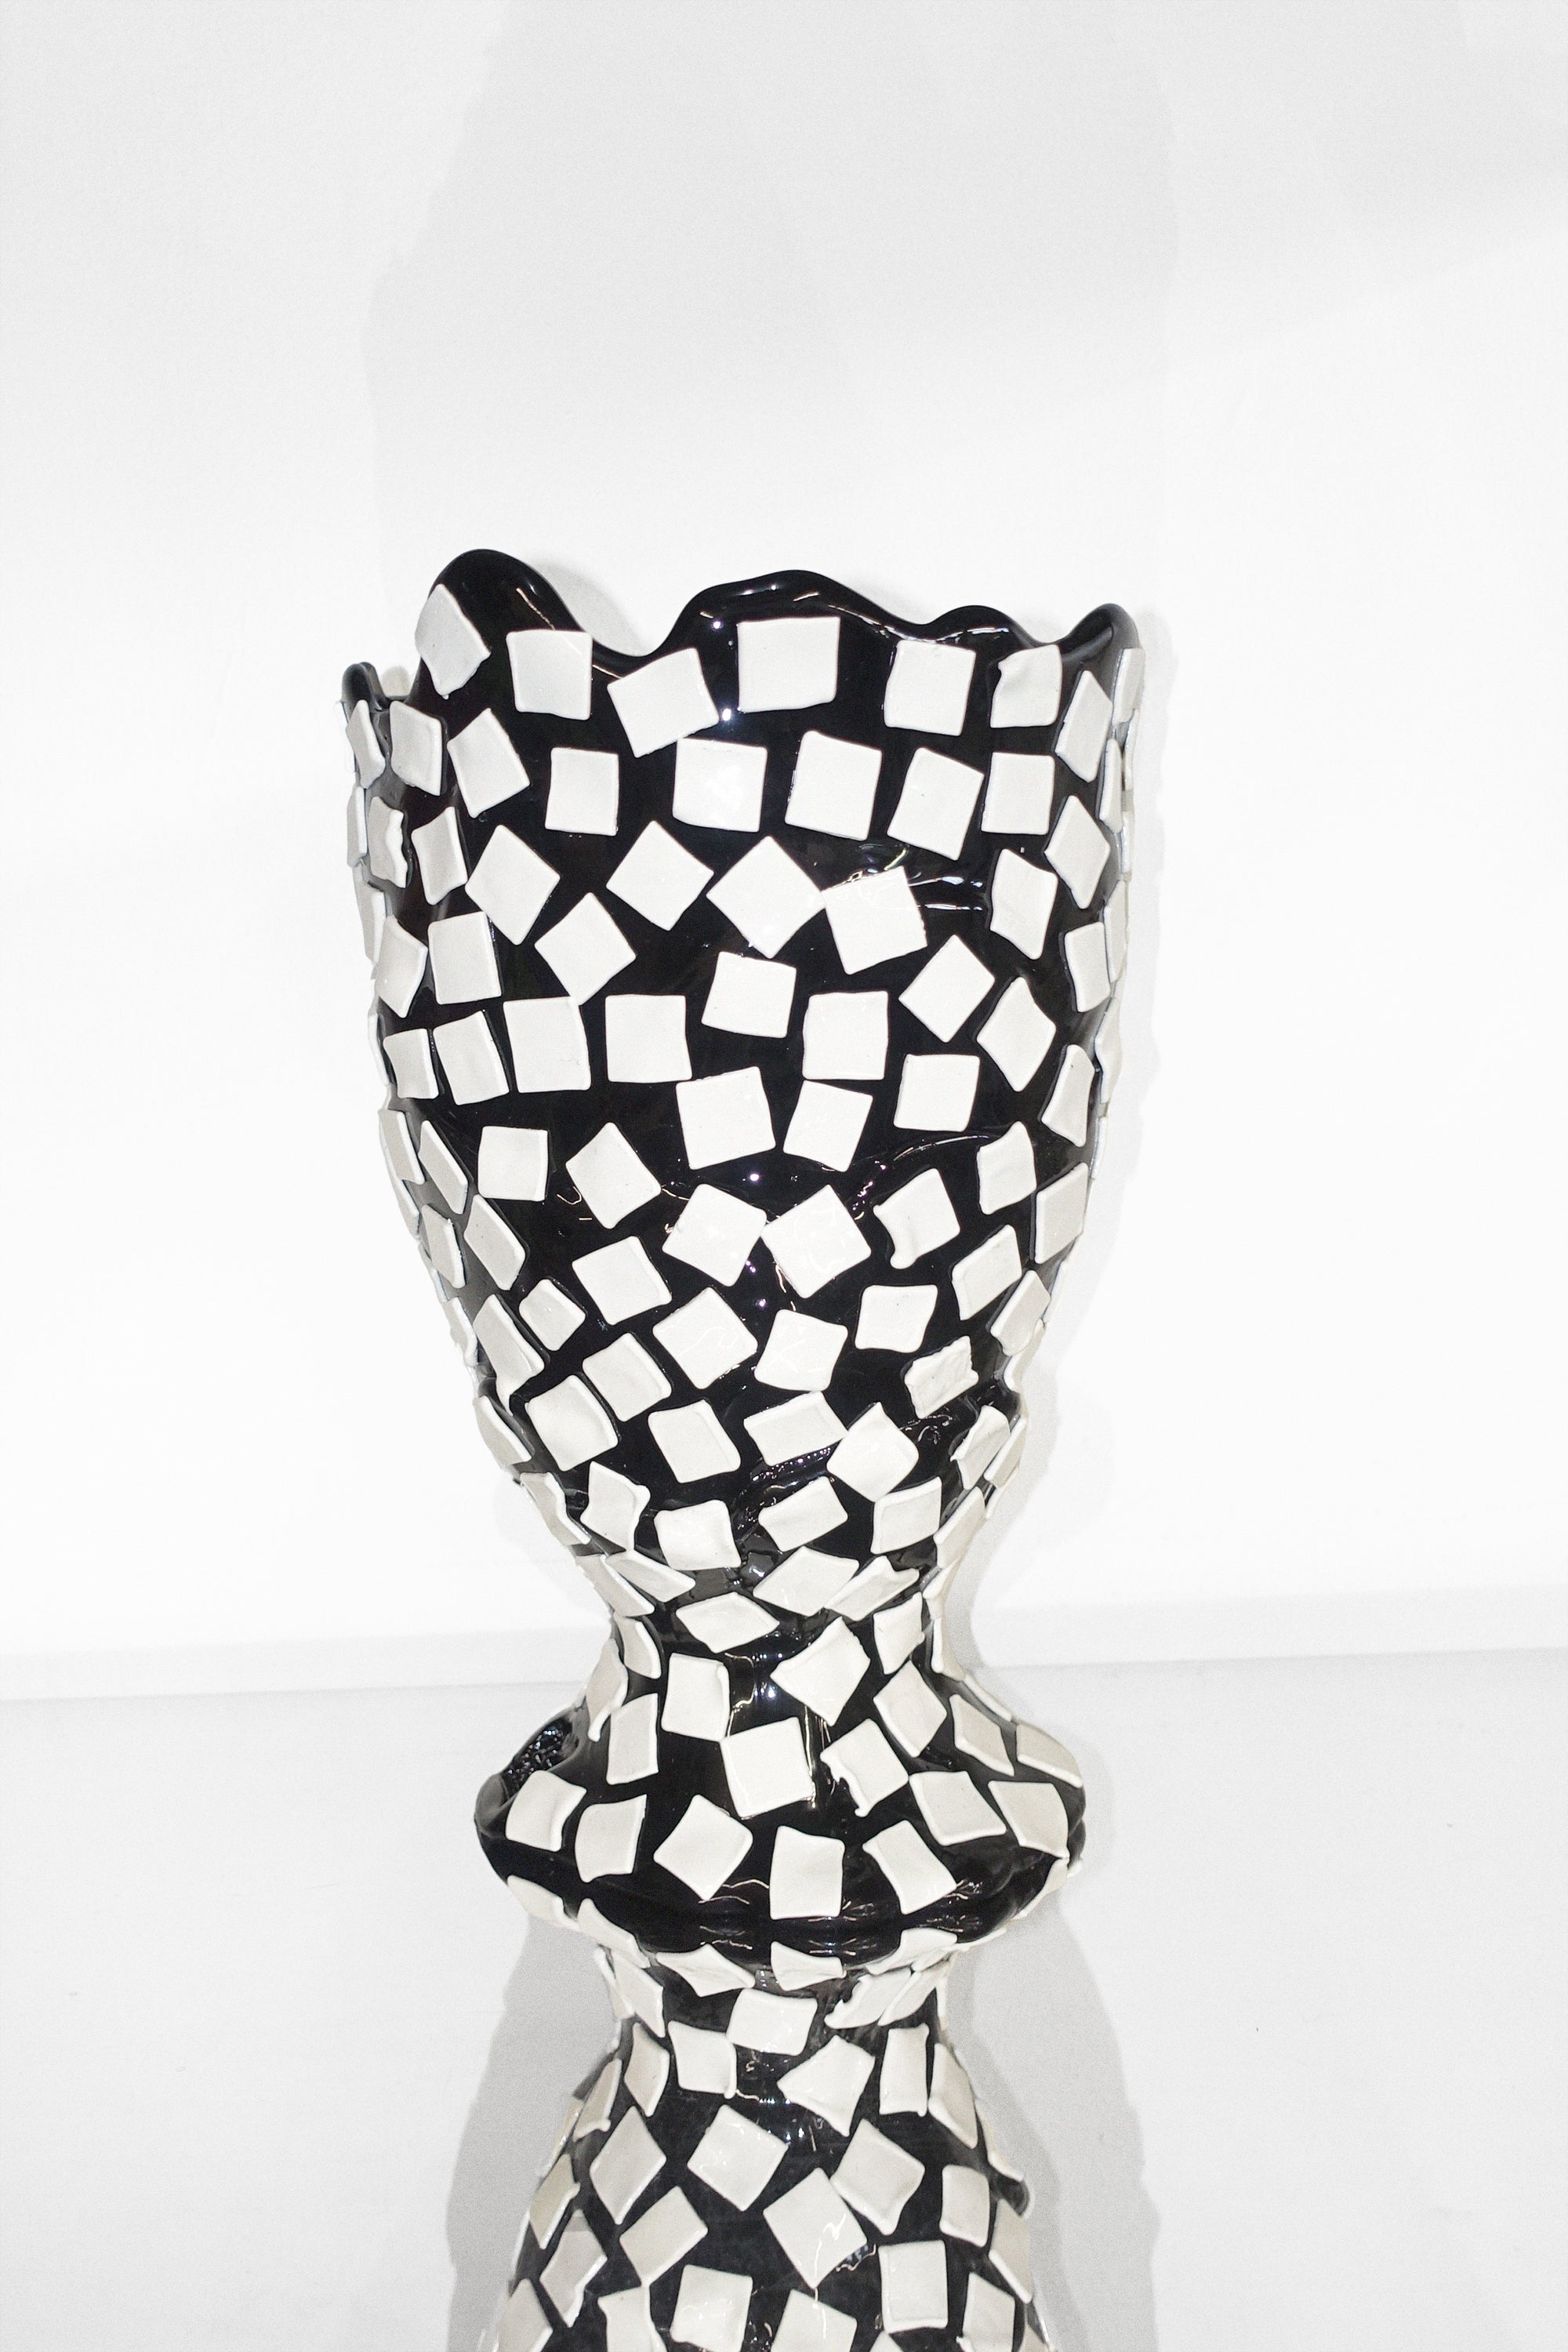 Rock Vase in Matte Black & White - Medium